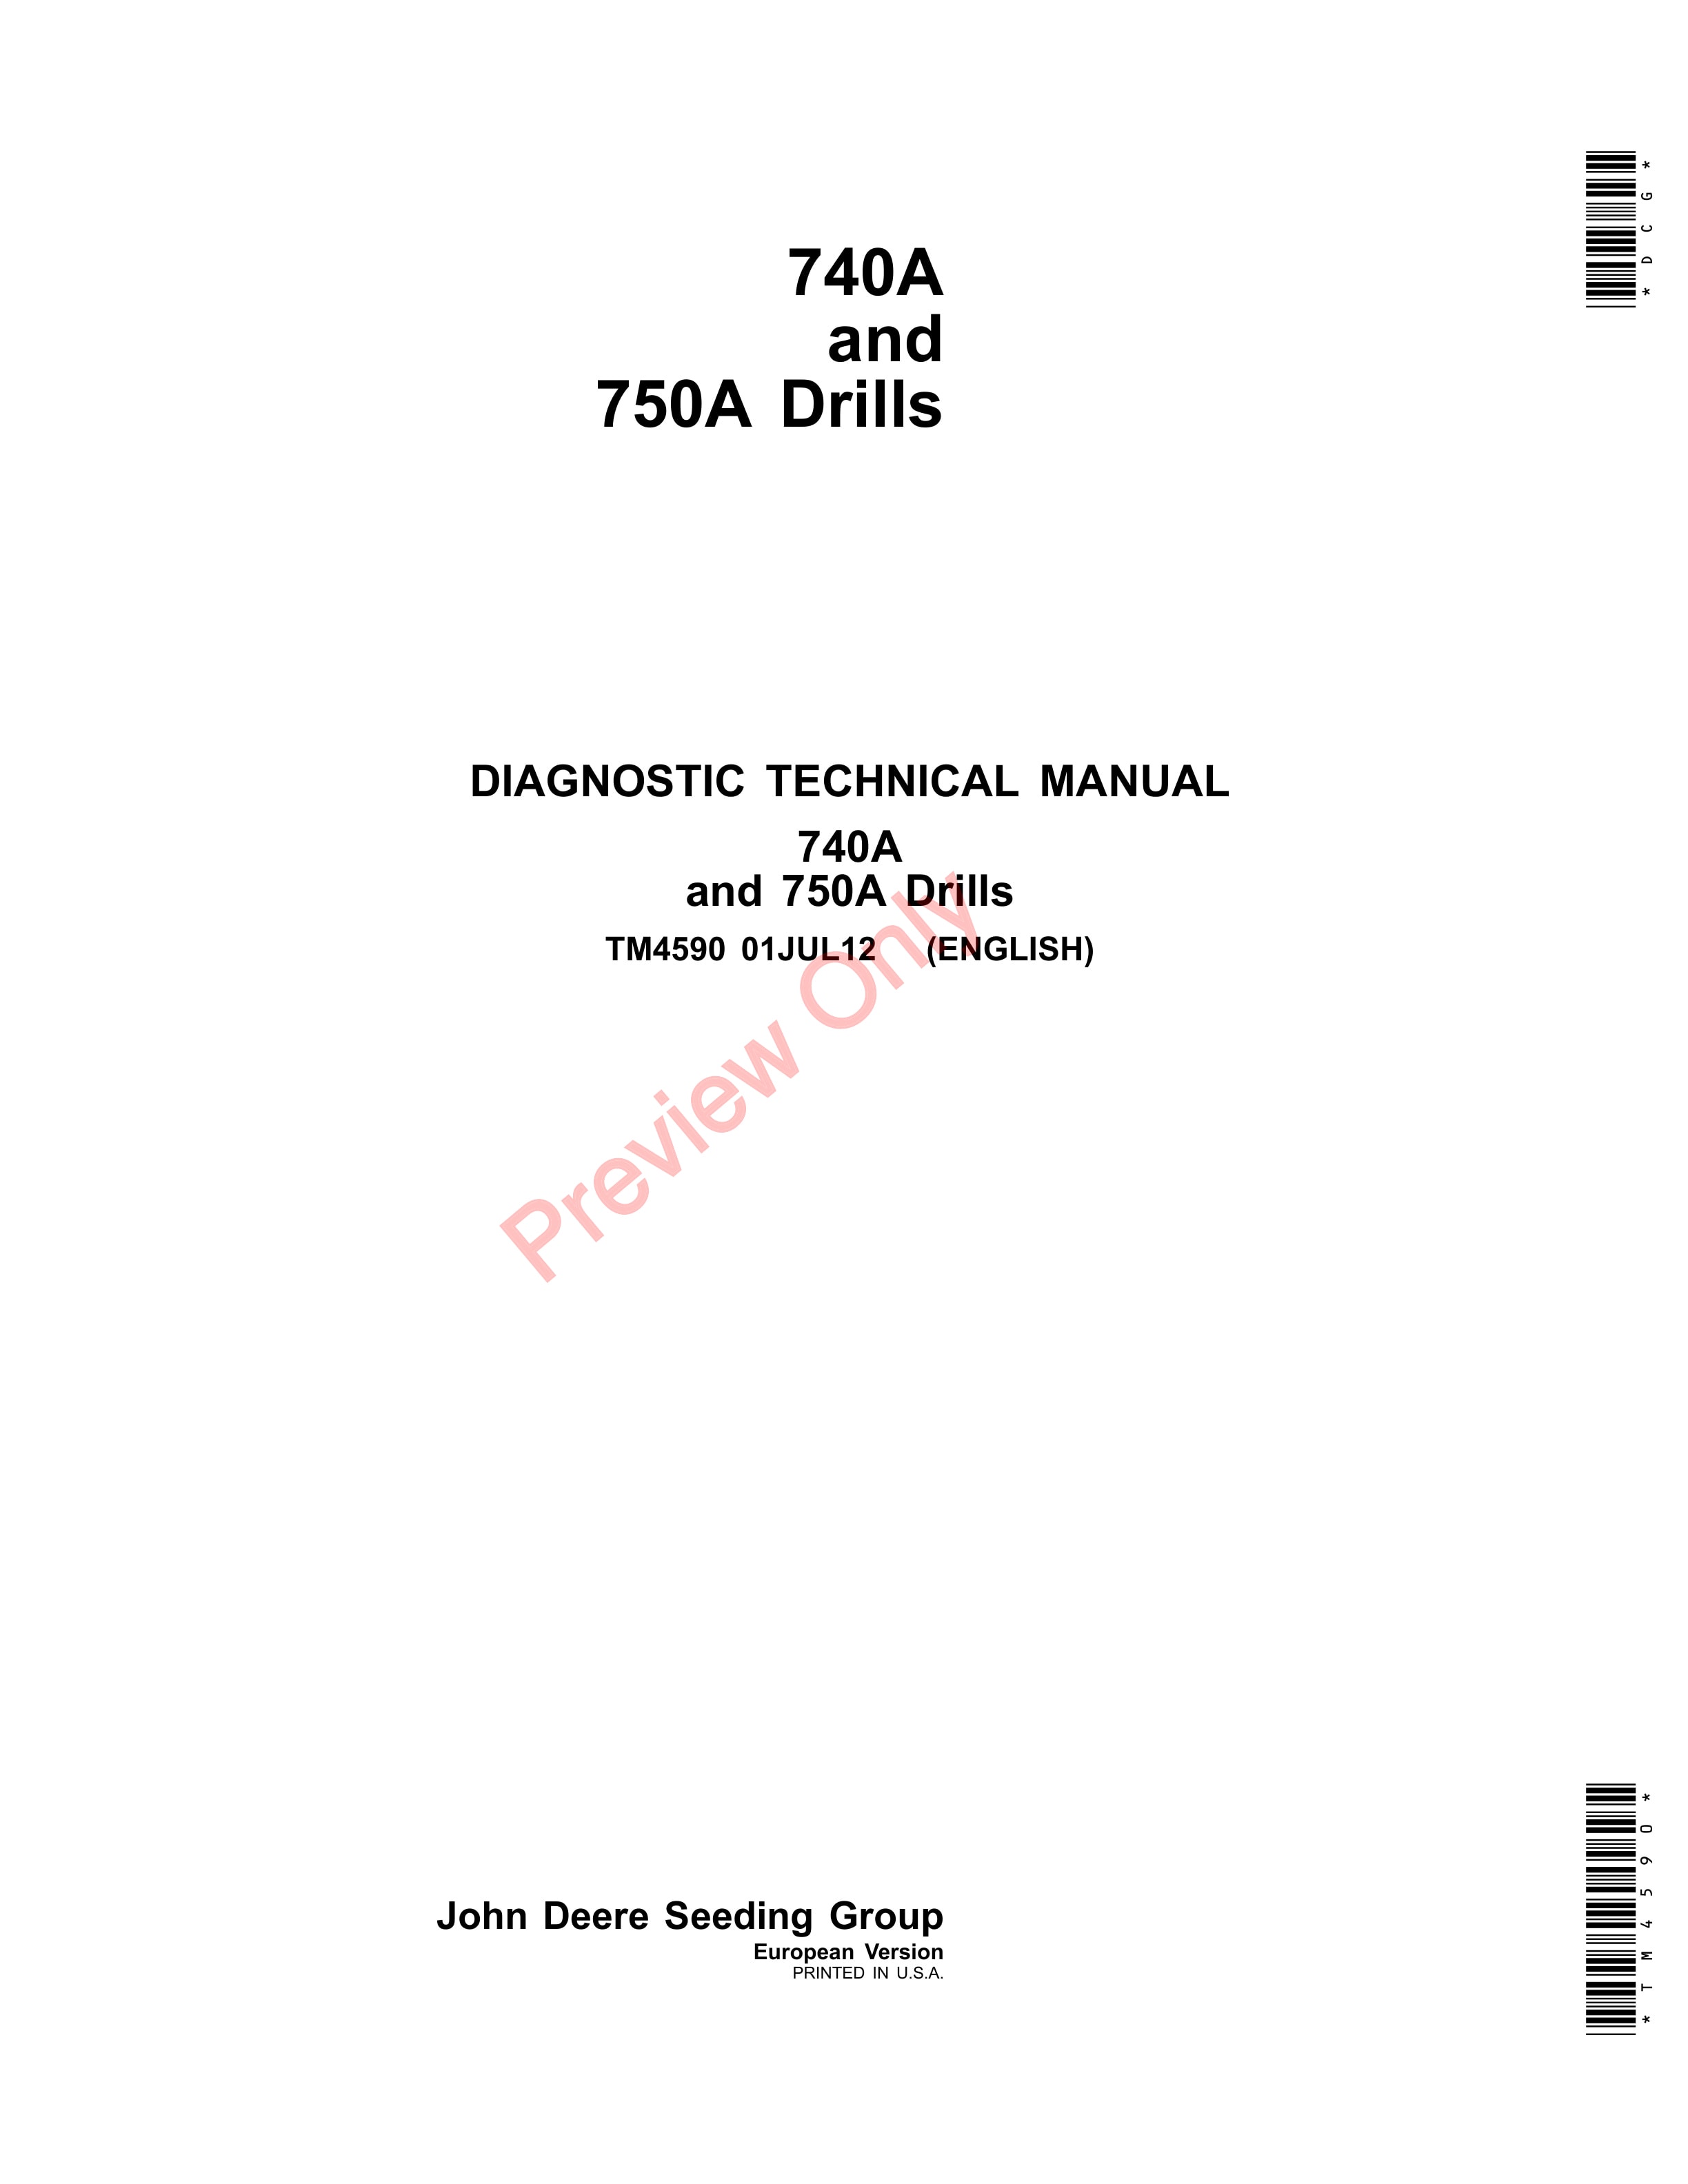 John Deere 740A and 750A Mulch Drills Diagnostic Technical Manual TM4590 31MAR16 1